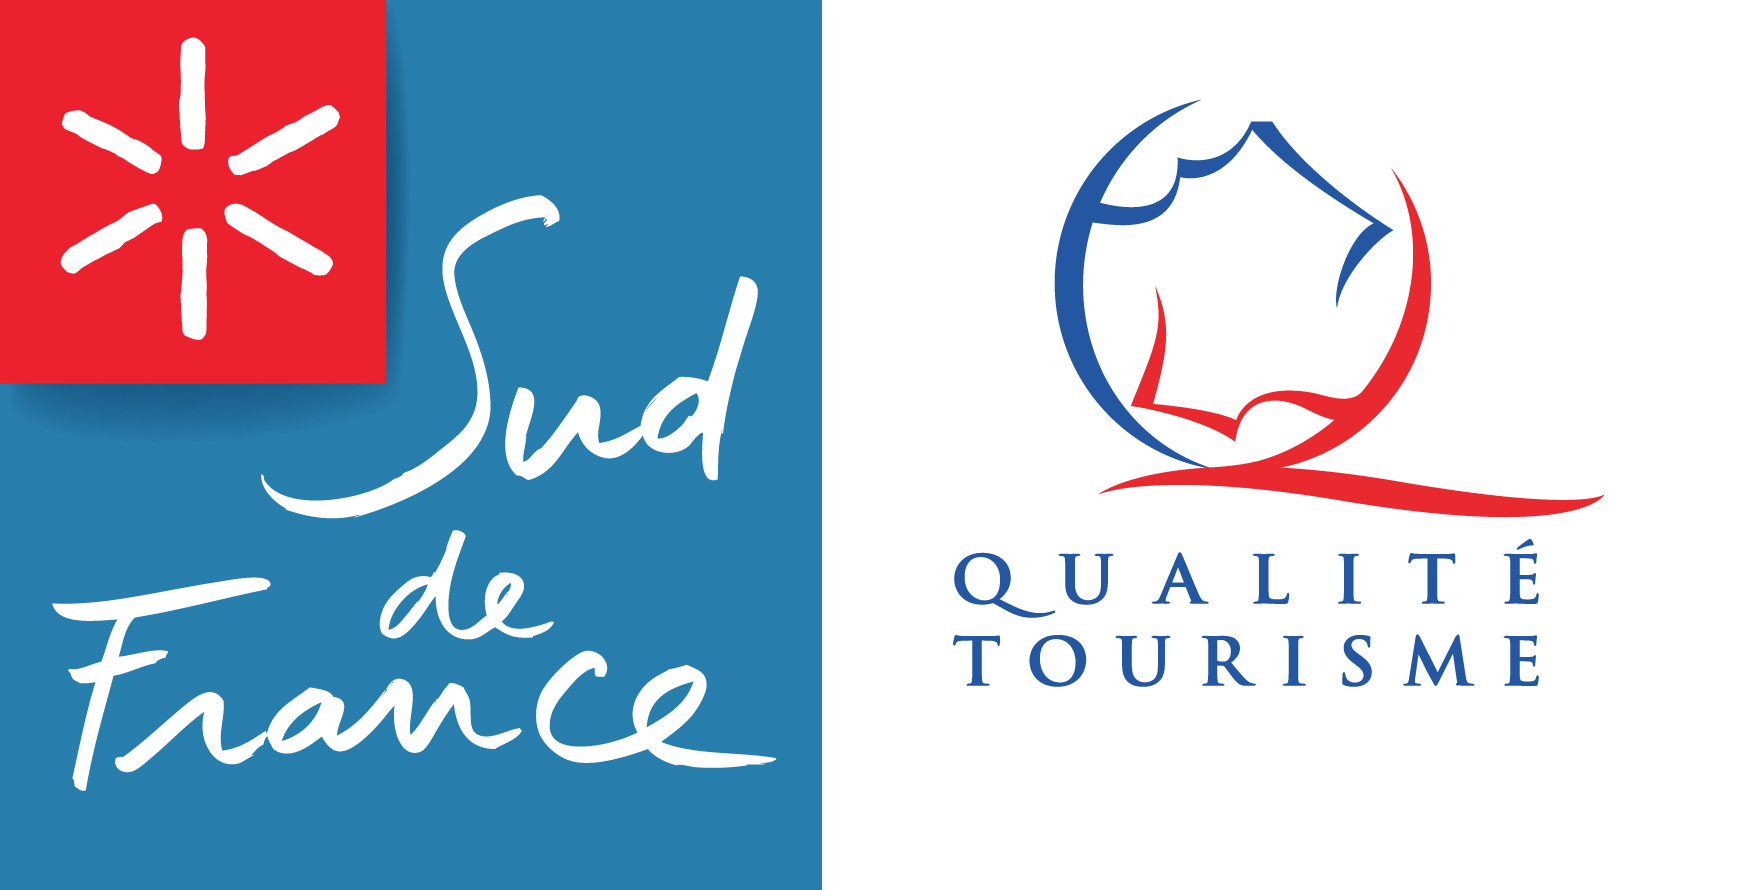 Qualification 2017 Sud de France with 97%